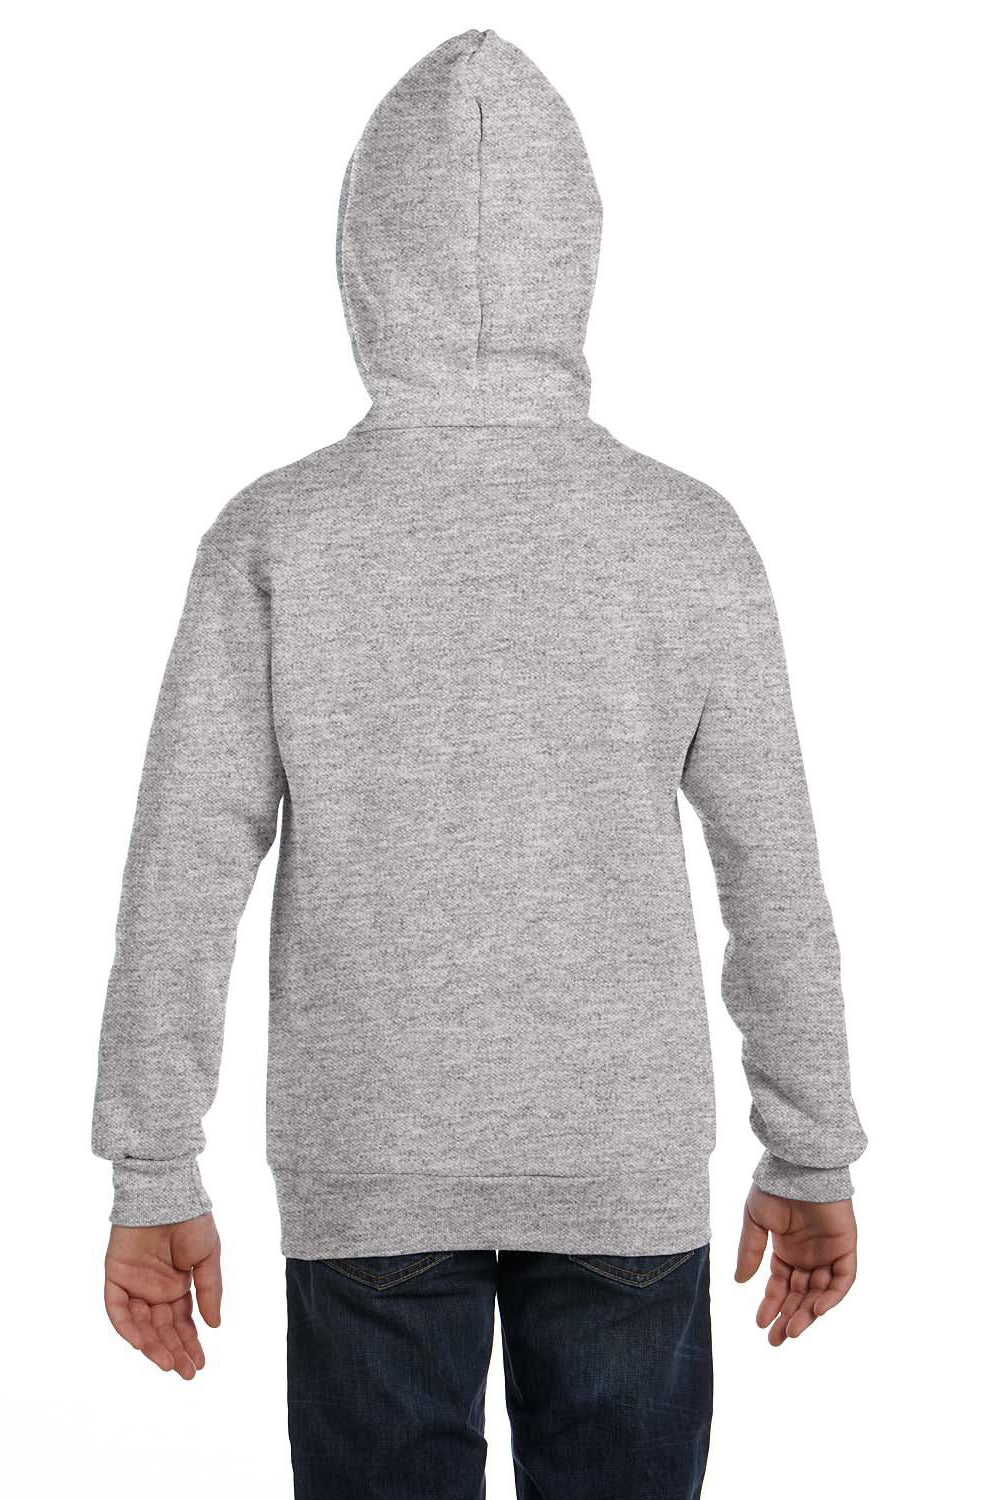 Hanes P480 Youth EcoSmart Print Pro XP Full Zip Hooded Sweatshirt Hoodie Light Steel Grey Back